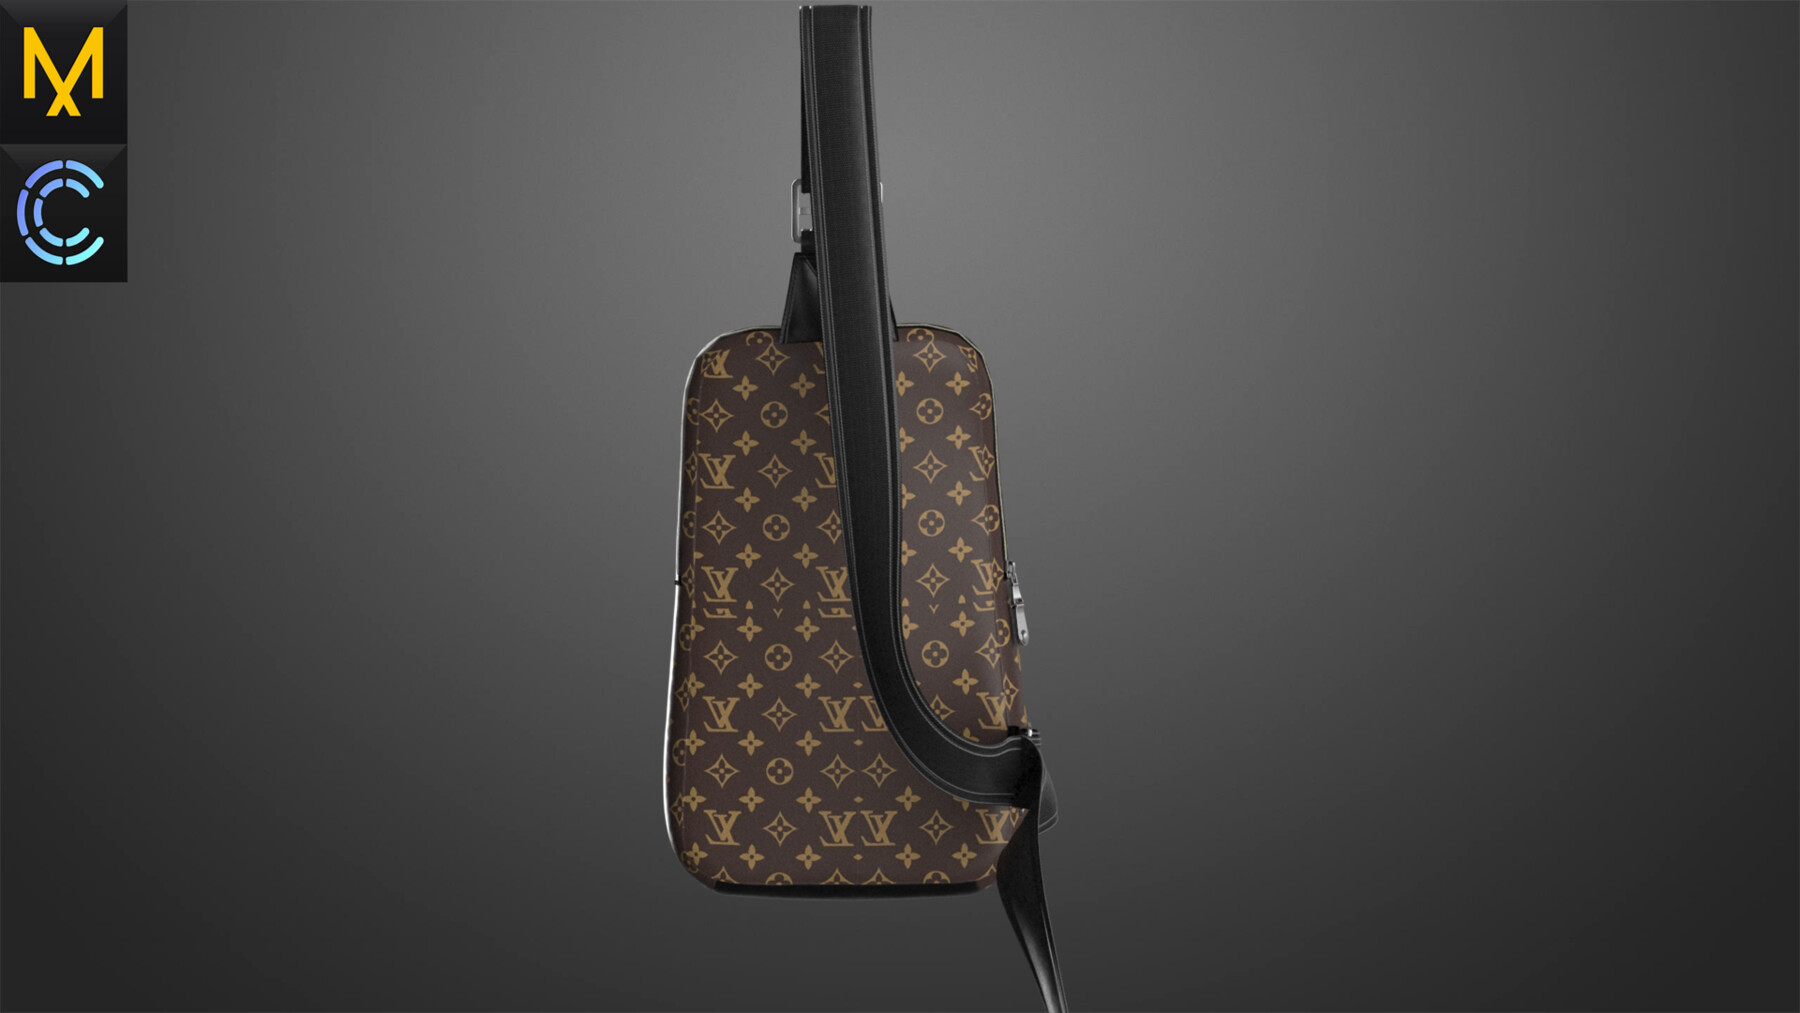 ArtStation - Louis Vuitton Bag OBJ mtl FBX ZPRJ